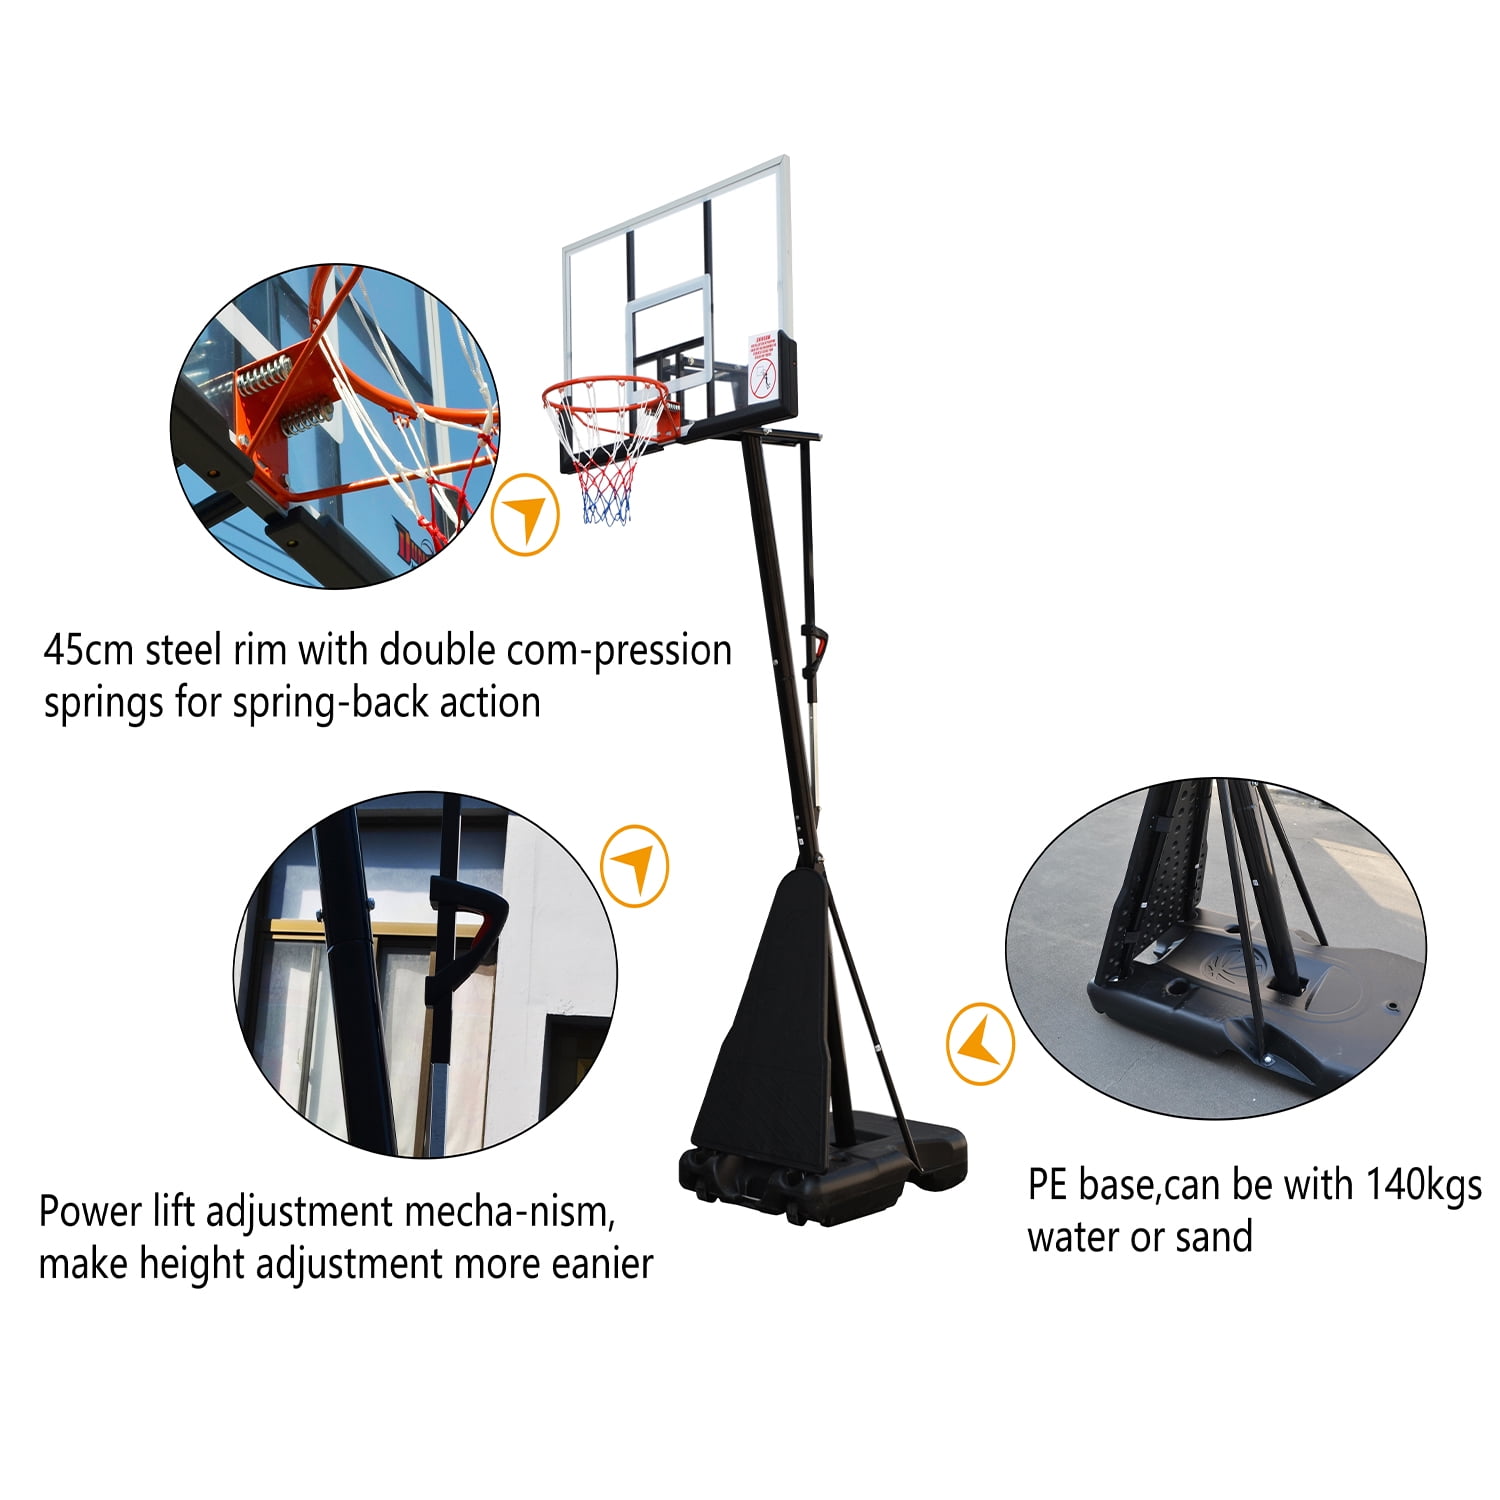 HONGGE 54in Portable Basketball Hoop with Polycarbonate Backboard